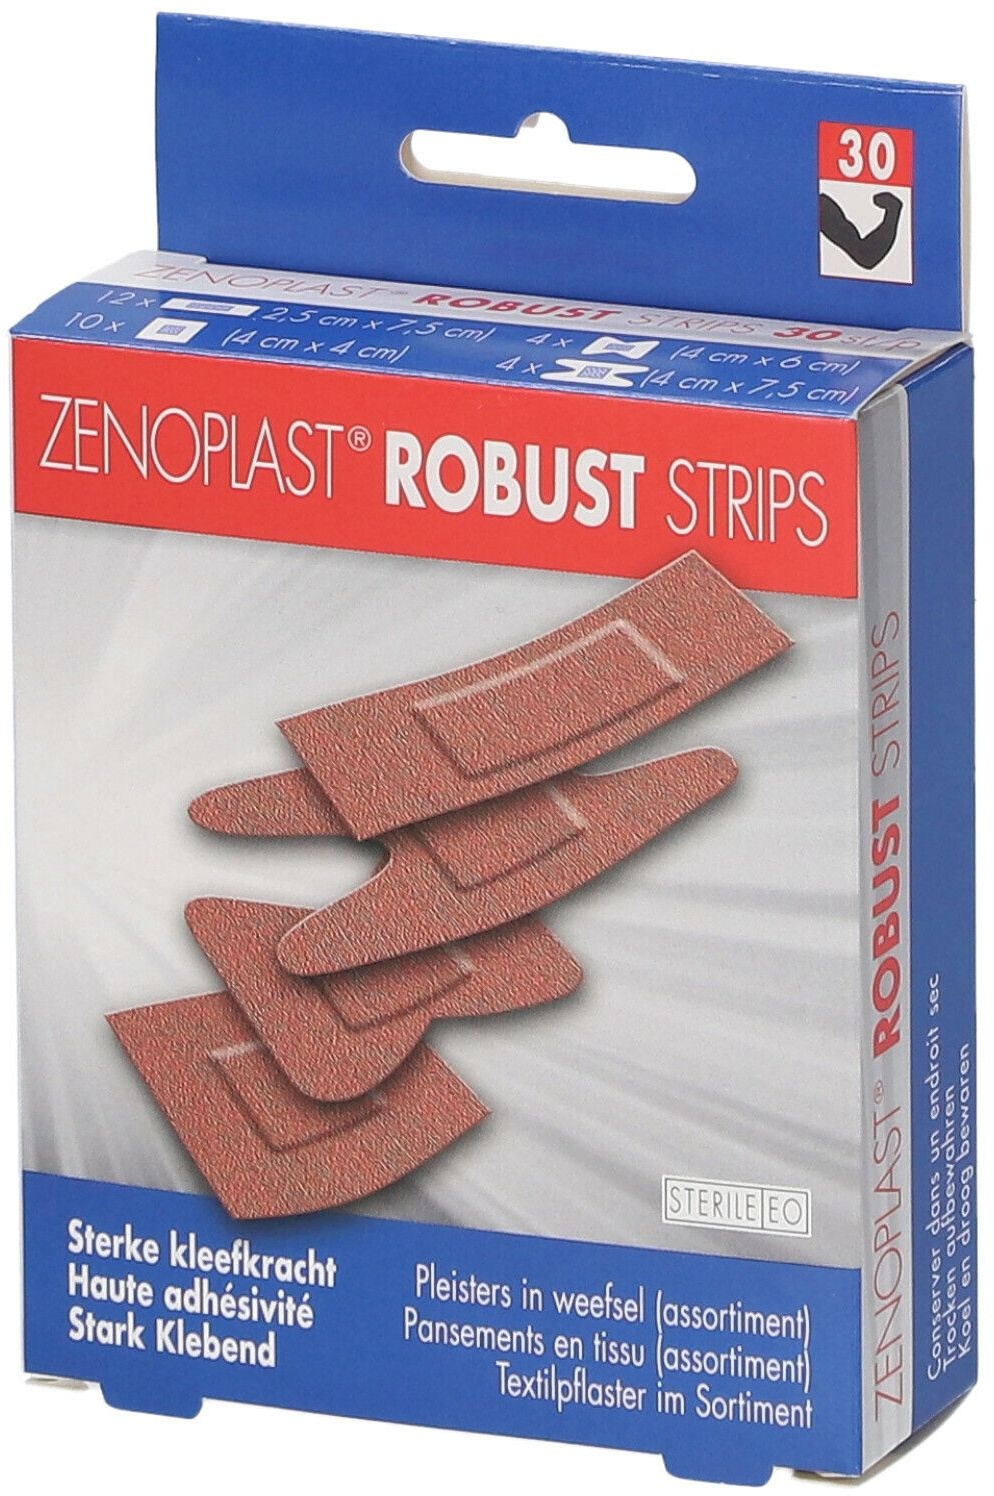 Zenoplast Robust Strips 30 pc(s) pansement(s)